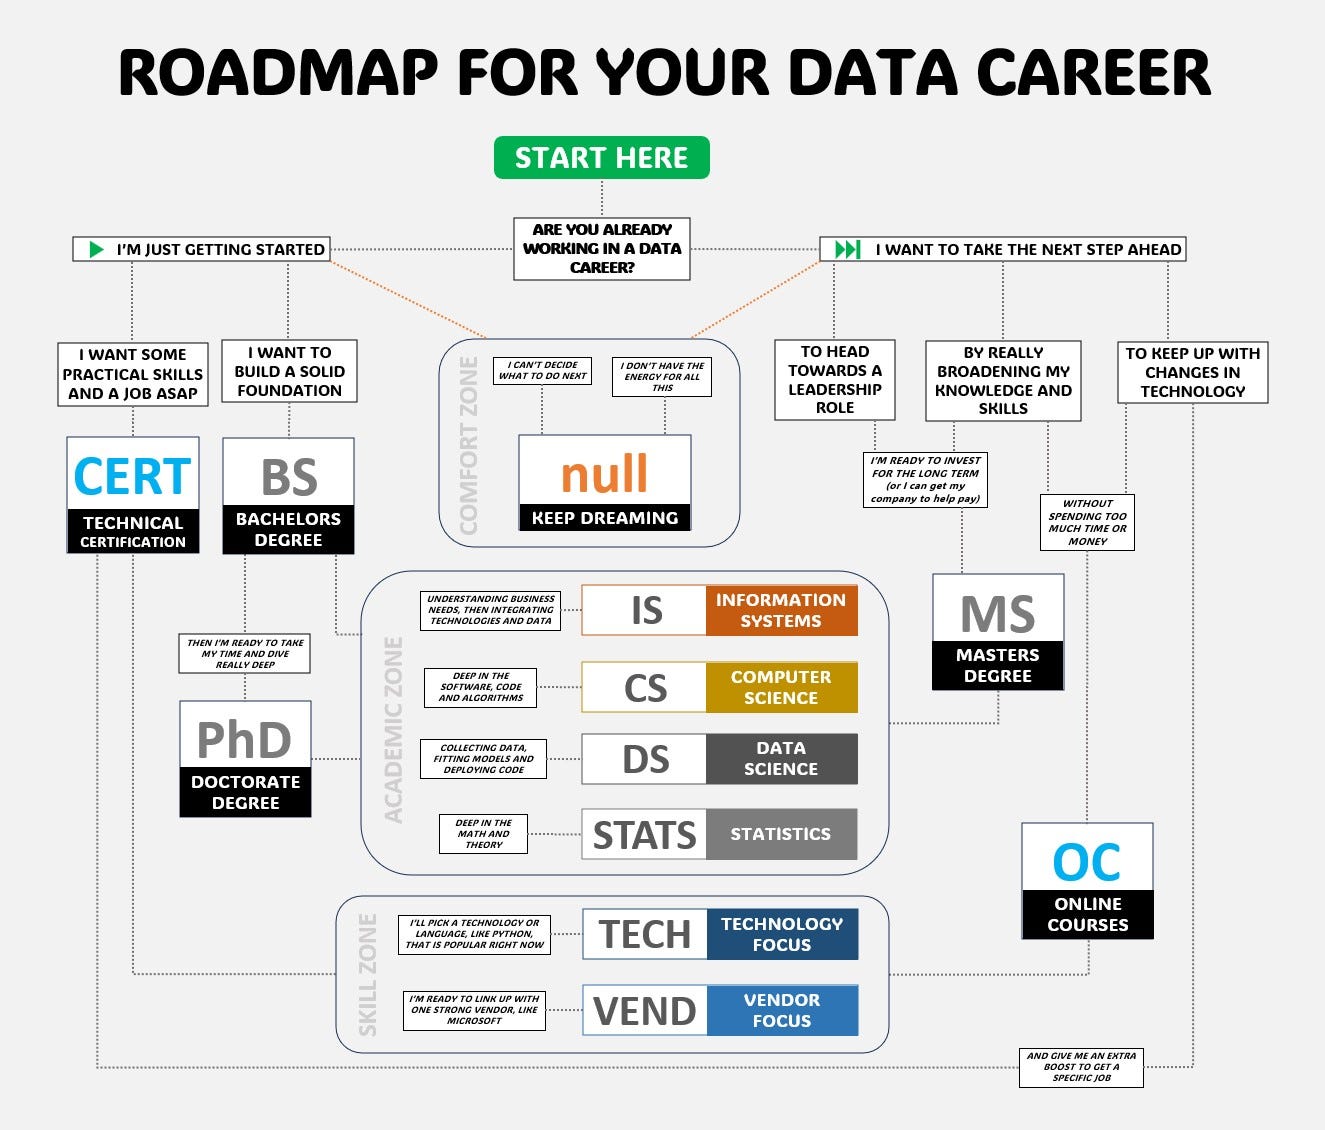 Roadmap for Your Data Career